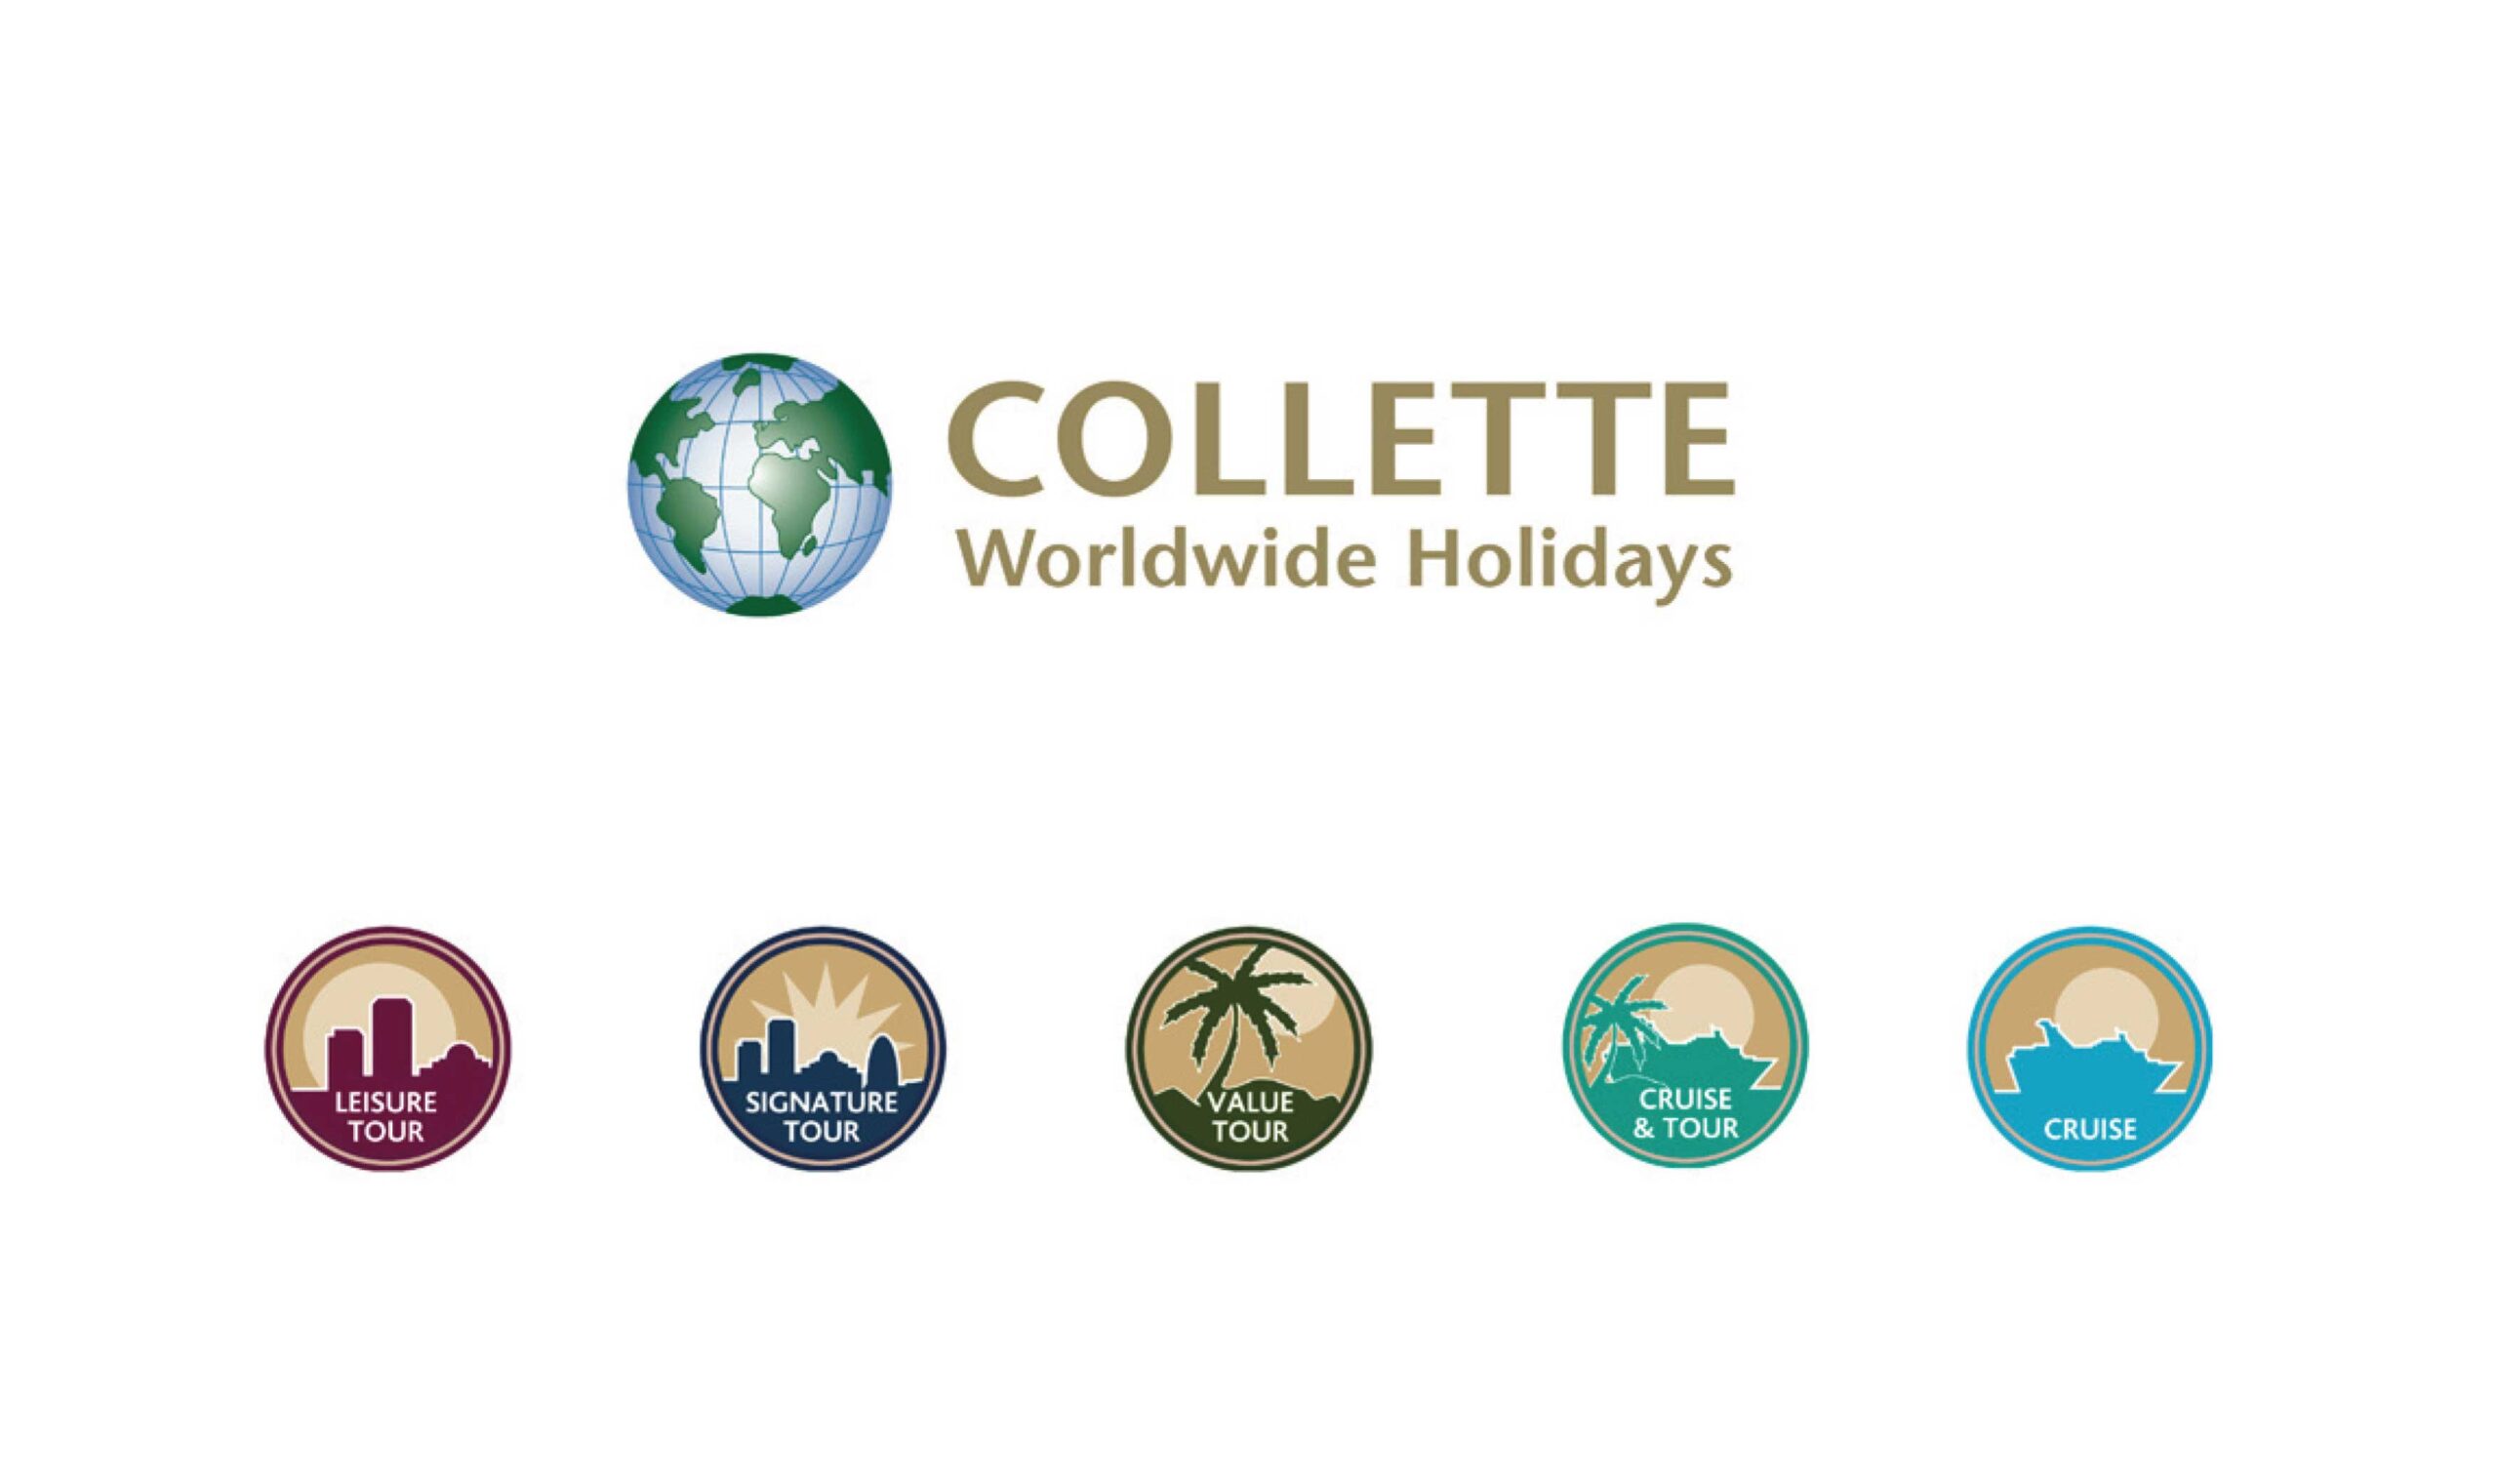 Collette Worldwide Holidays Logos